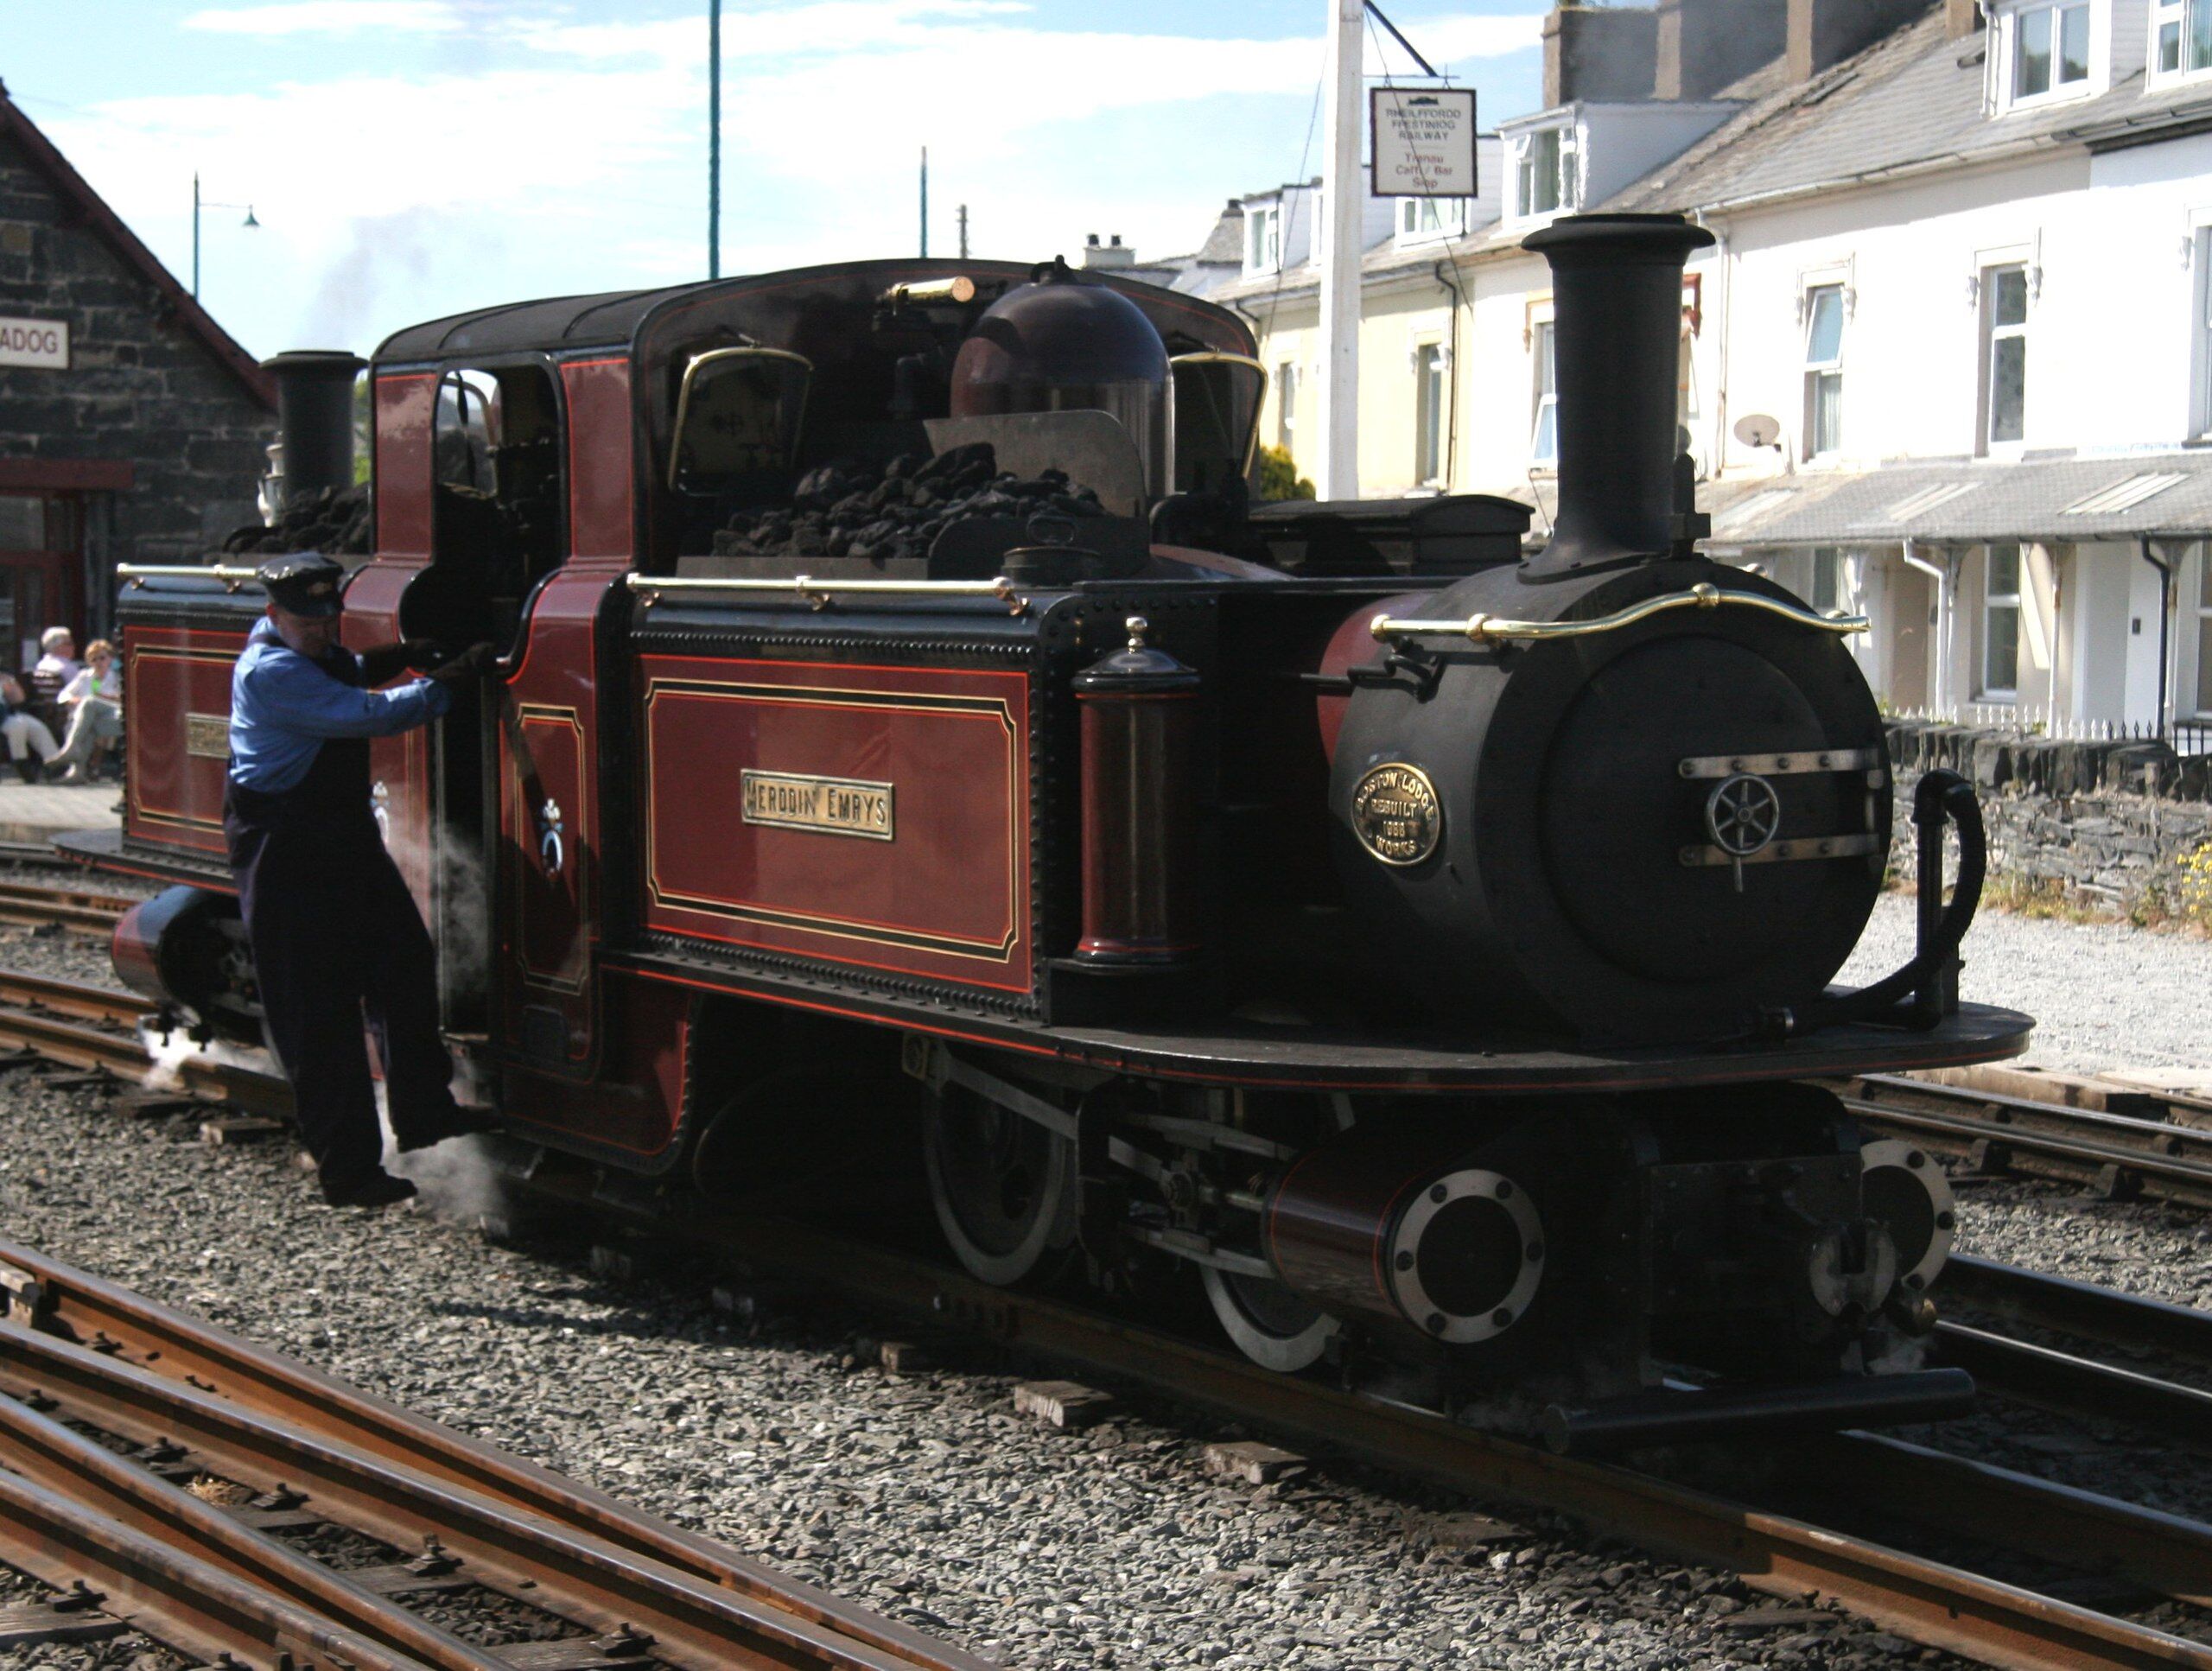 Fairlie locomotive, Locomotive Wiki